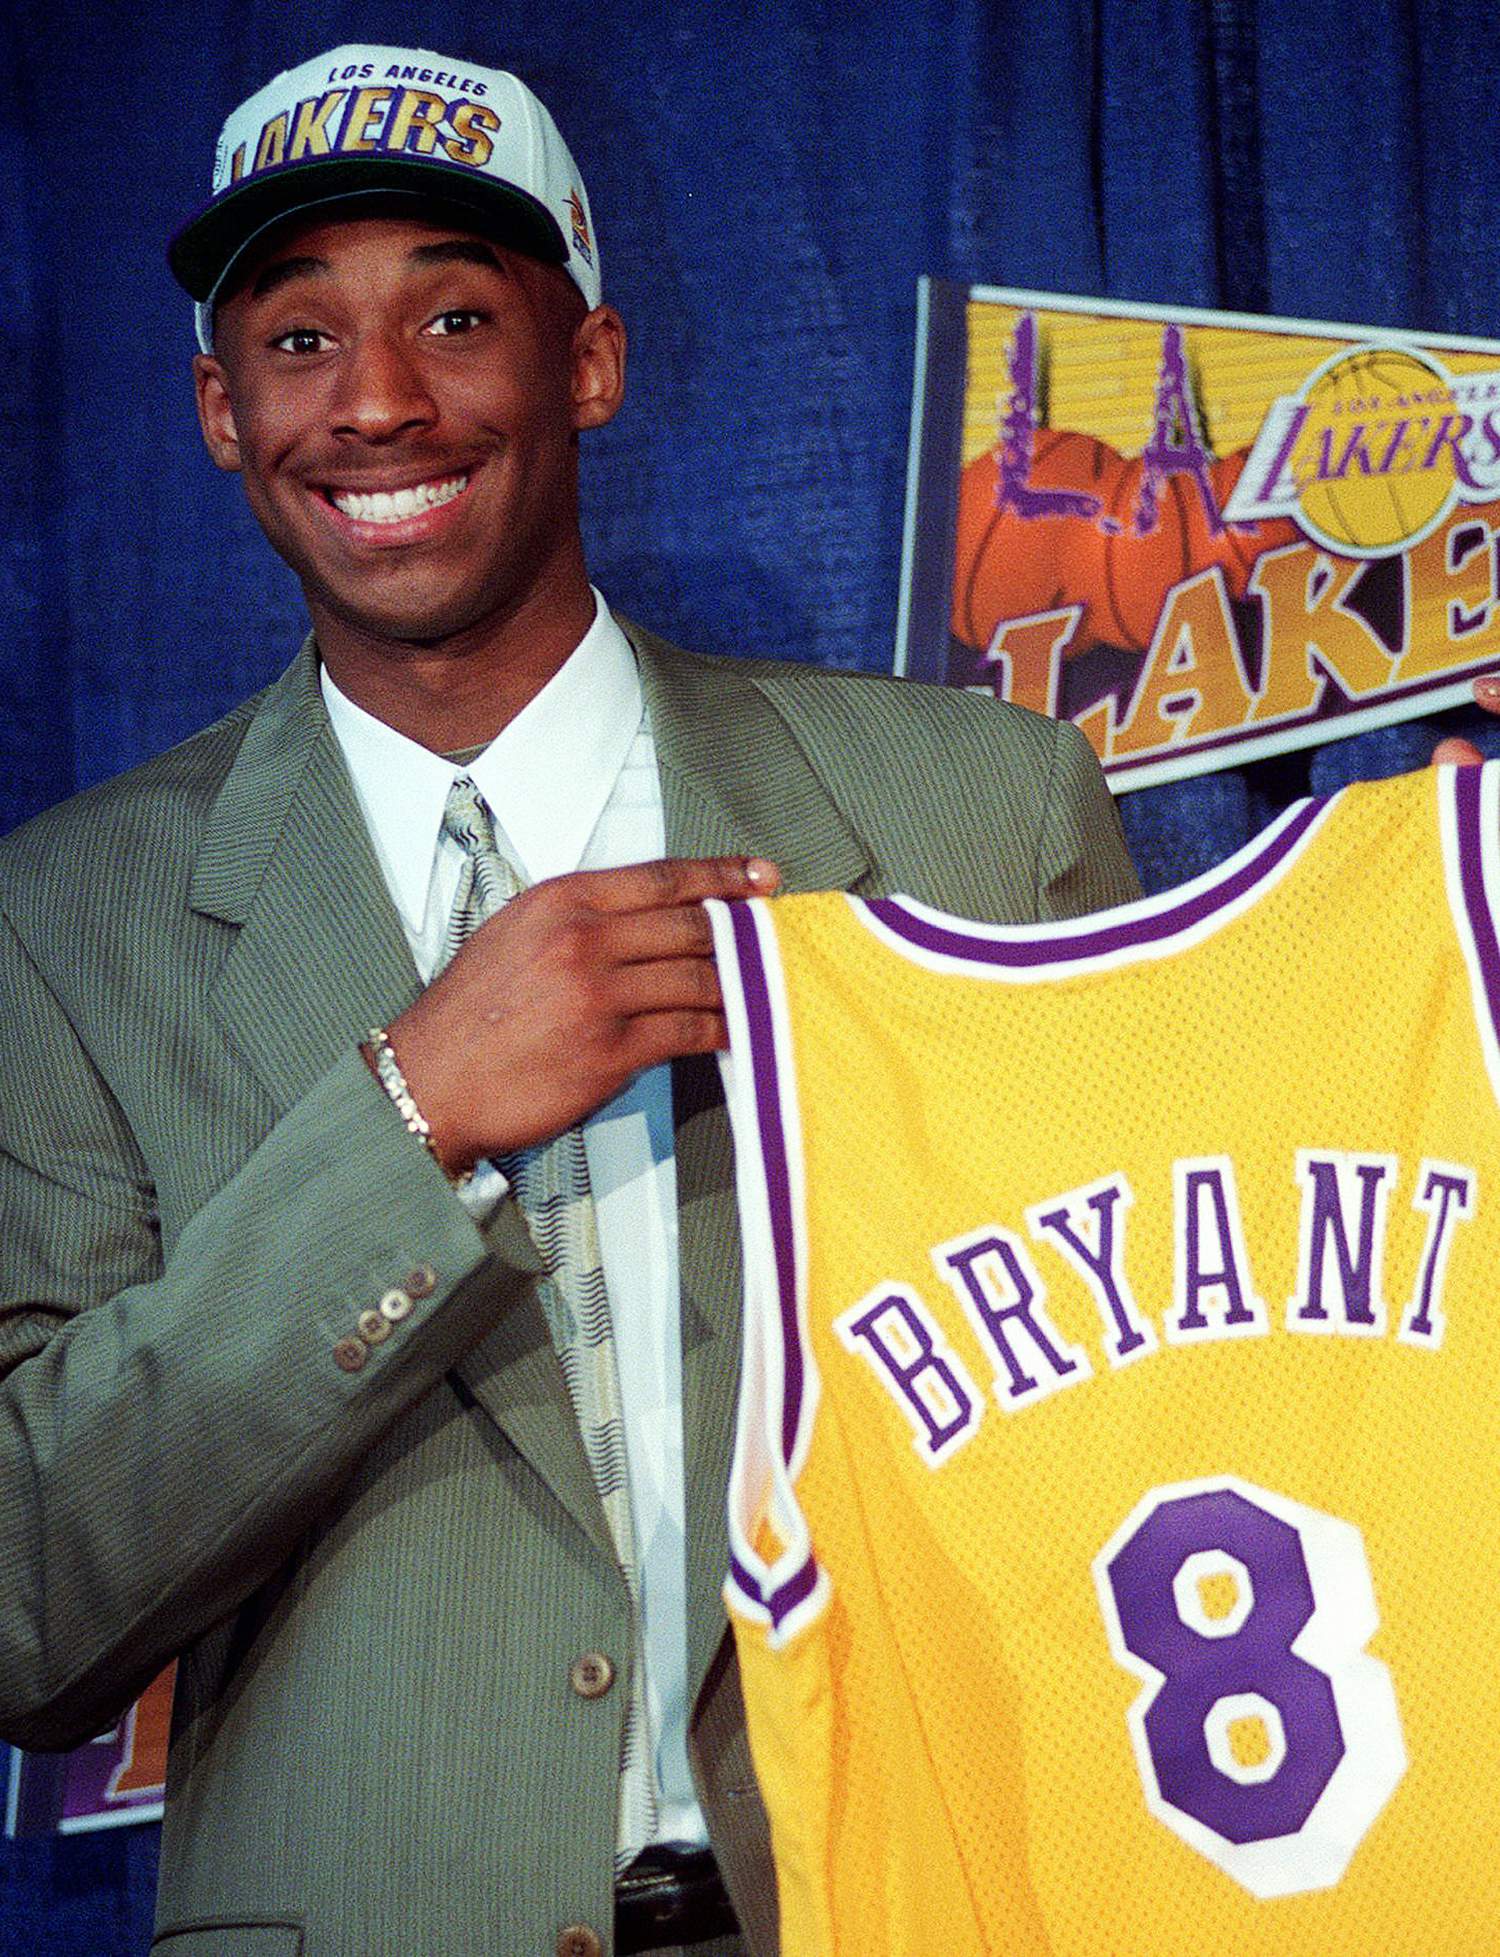 In Europe, Kobe Bryant recalled for his 'Italian qualities'